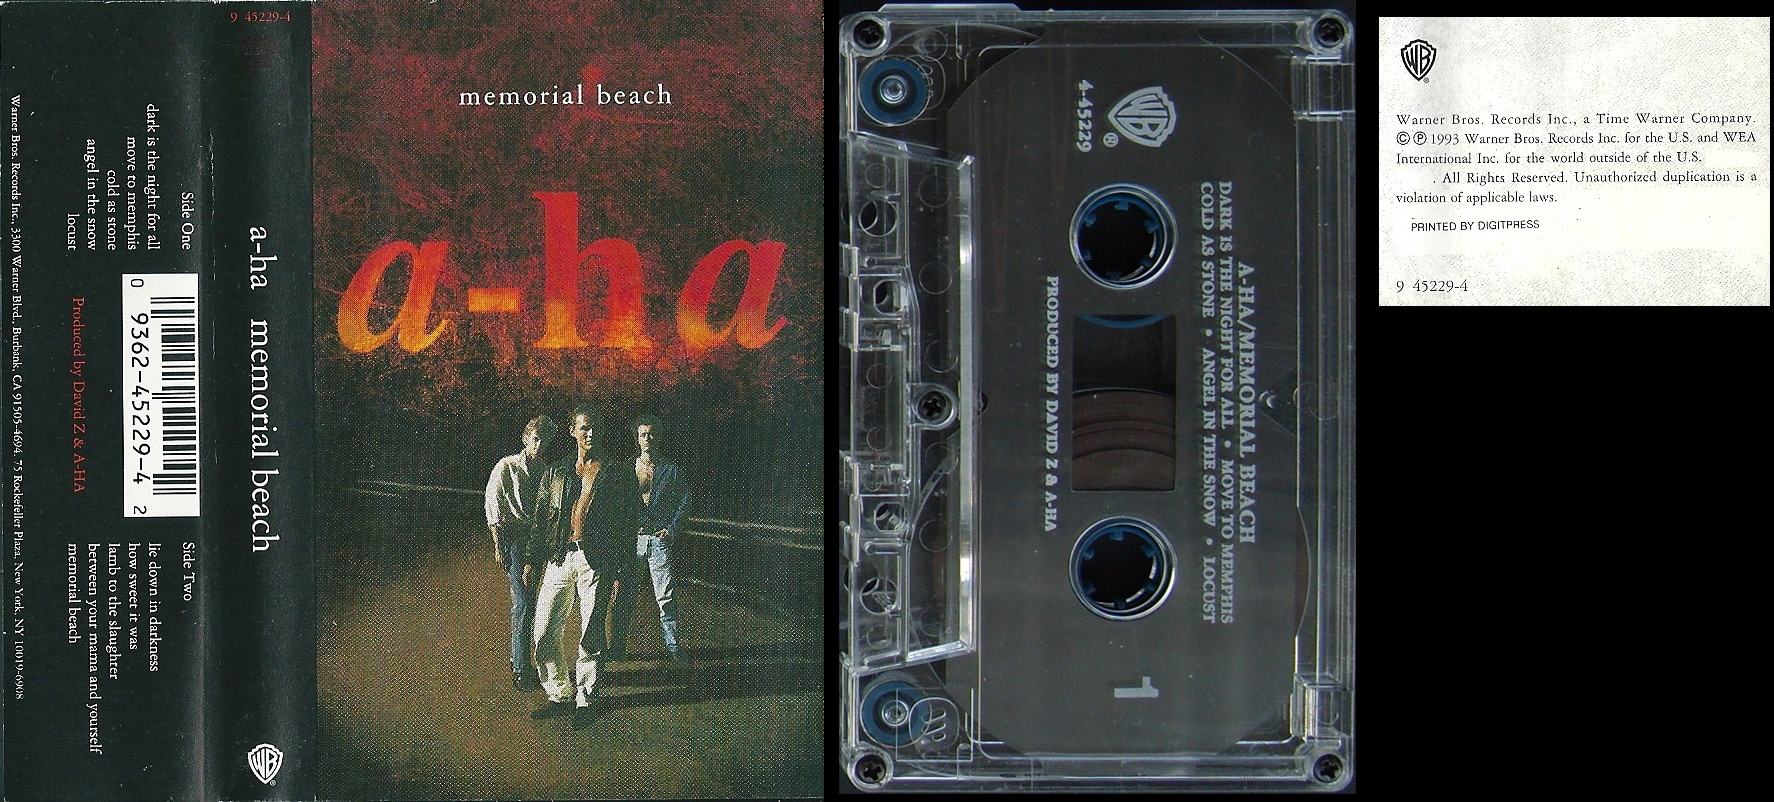 Memorial Beach USA cassette - click to enlarge